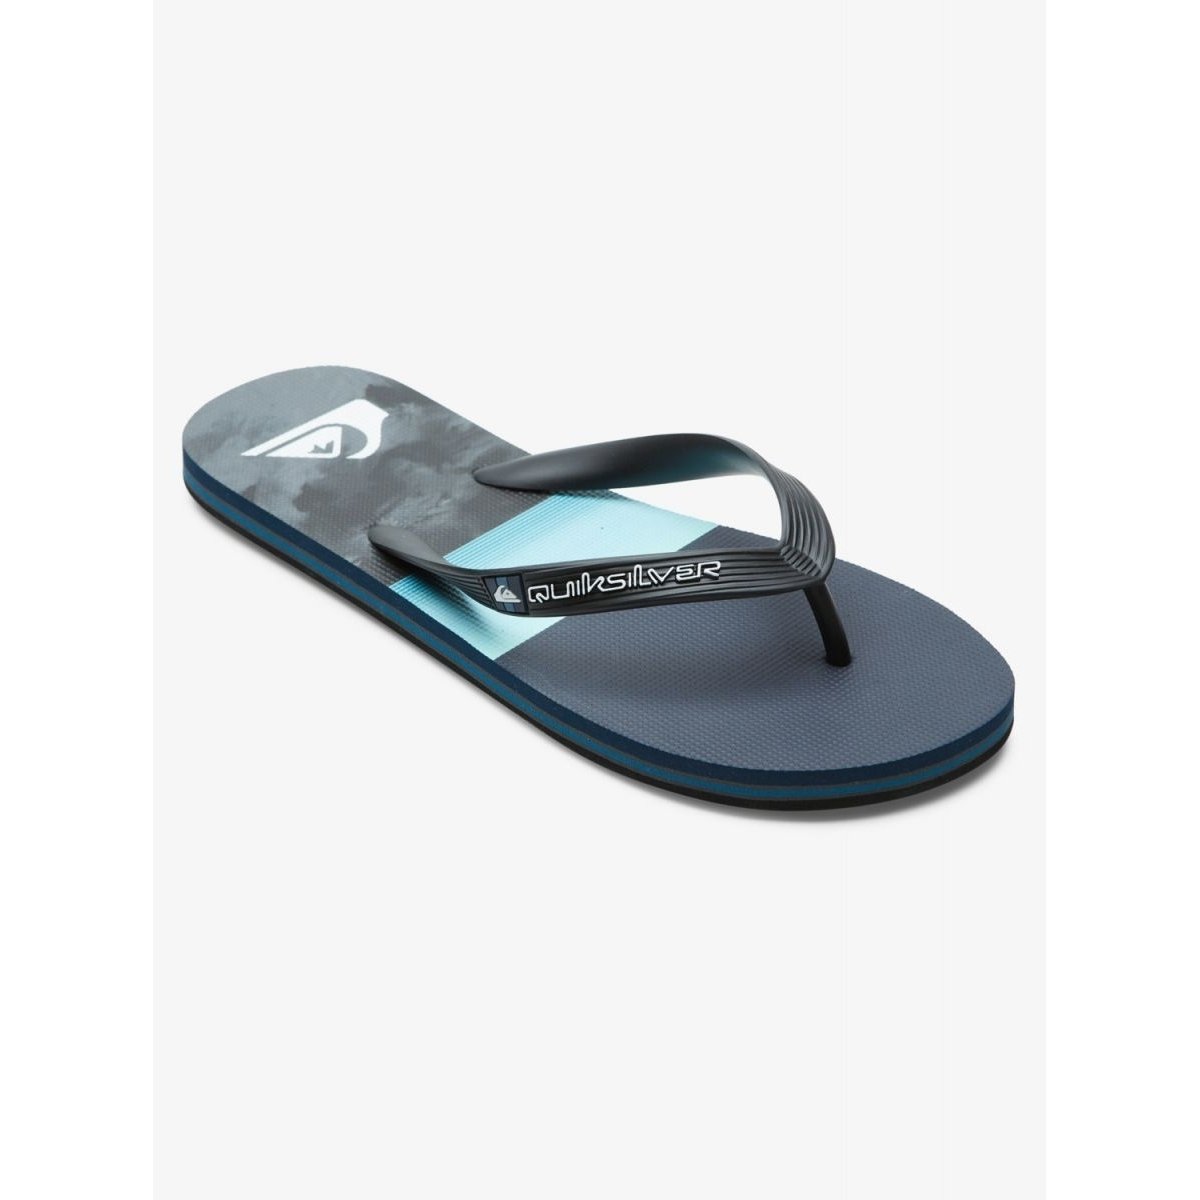 Quiksilver Men's Molokai Panel Flip Flop Sandals - AQYL101263-XBBS BLUE/BLUE/GREY - BLUE/BLUE/GREY, 6